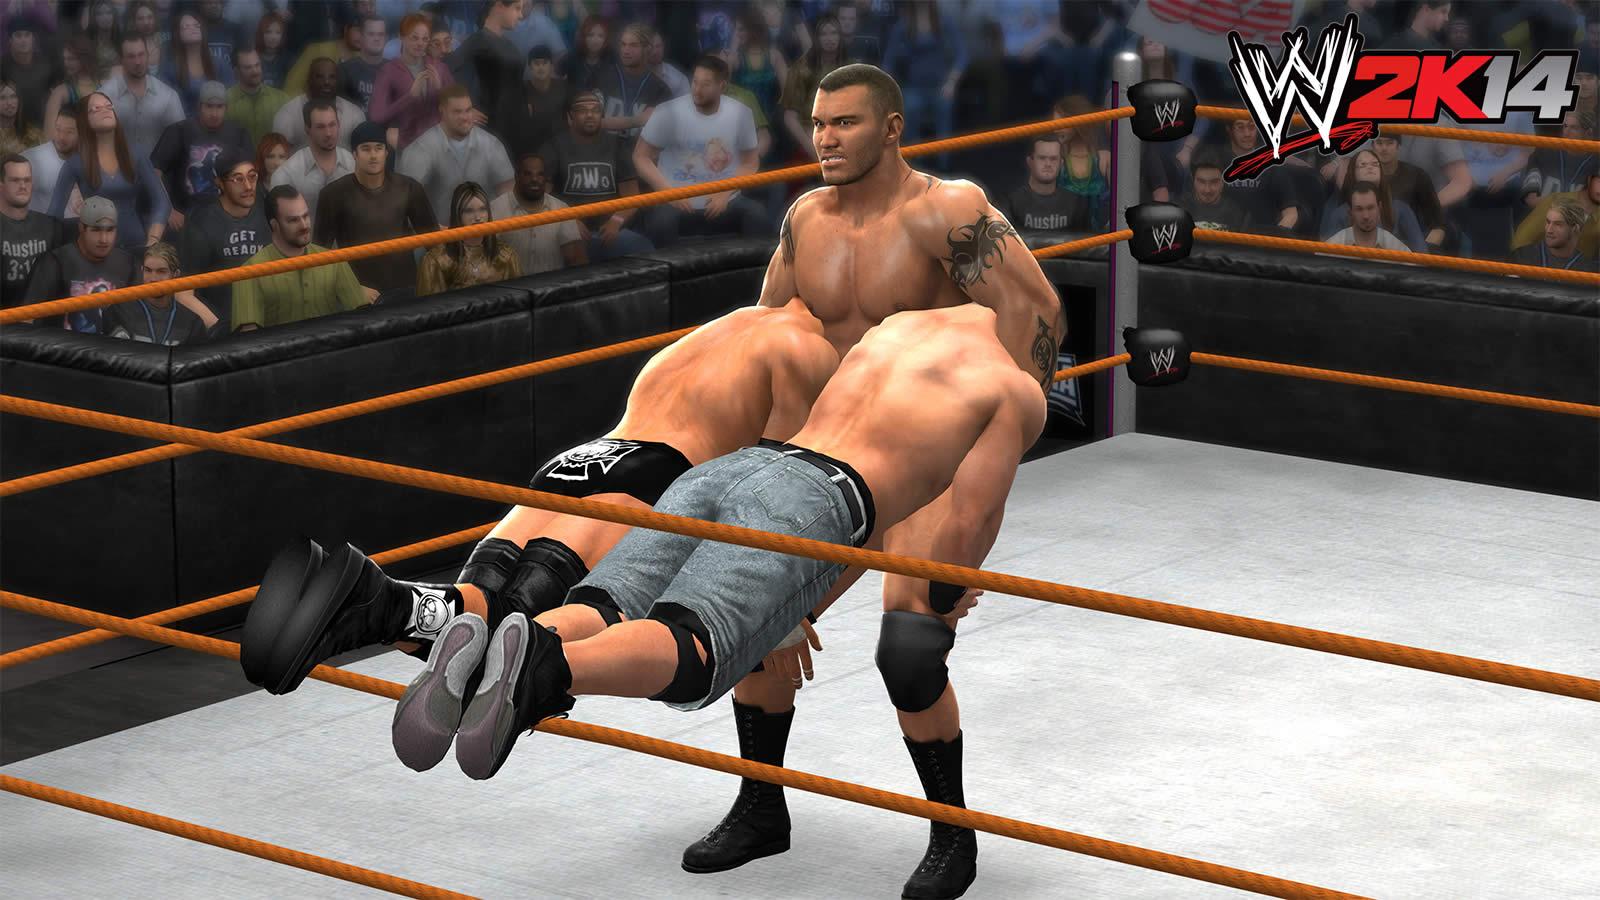 WrestleMania XXIV: WWE Champion Randy Orton vs. John Cena vs